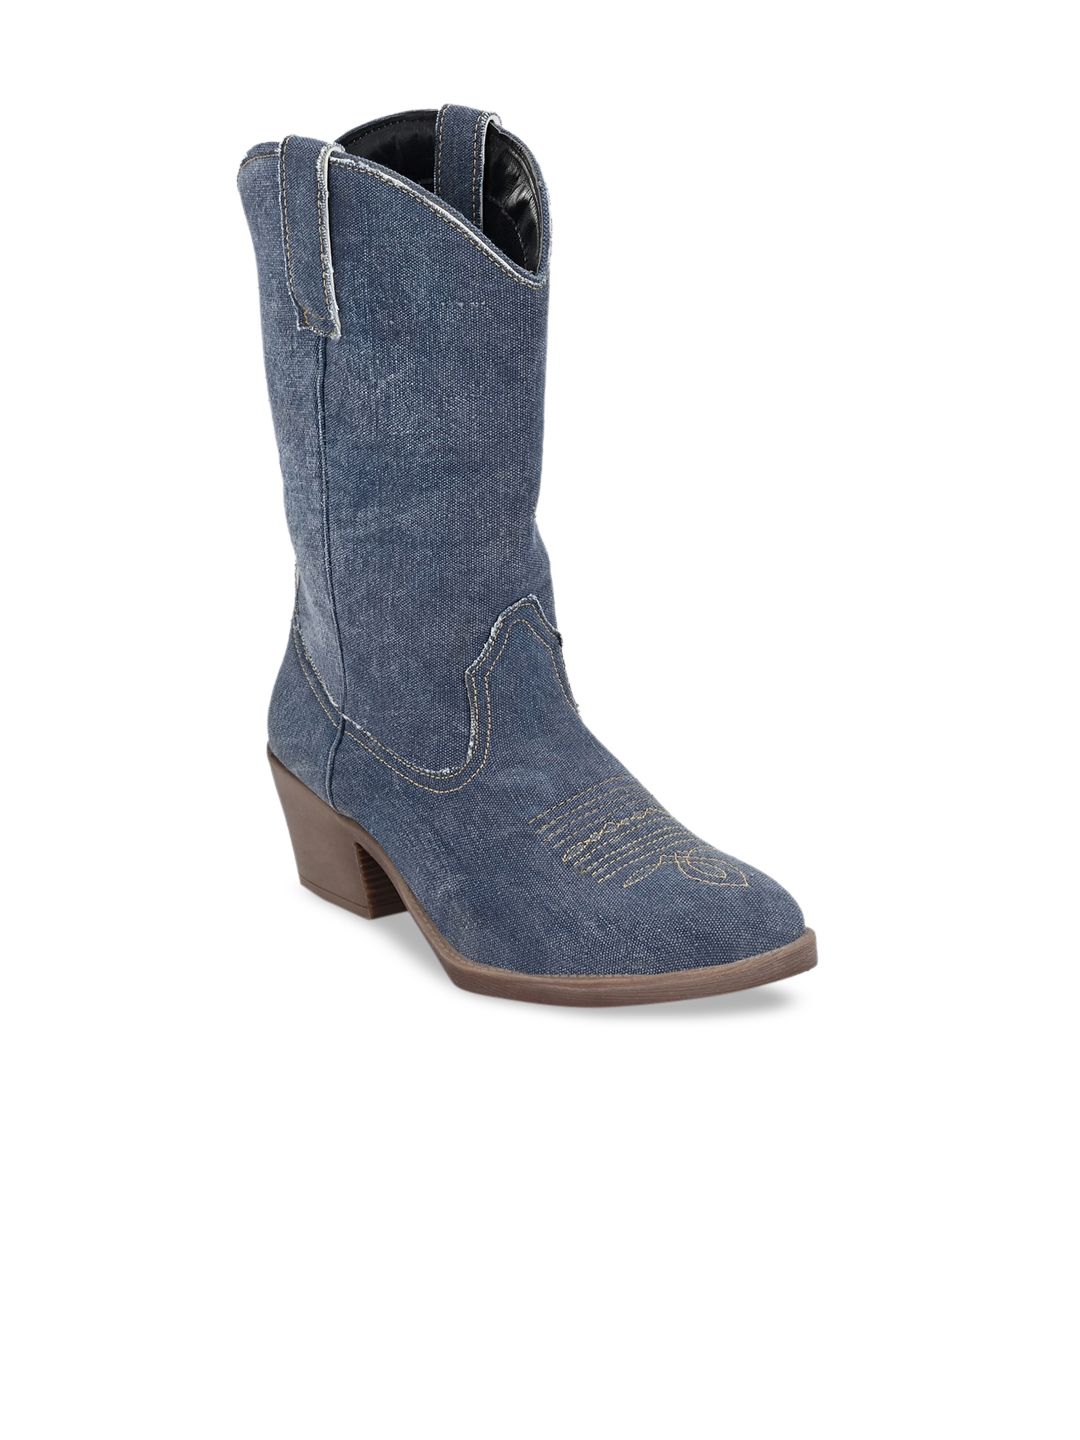 CARLO ROMANO Women Blue High-Top Flat Boots Price in India